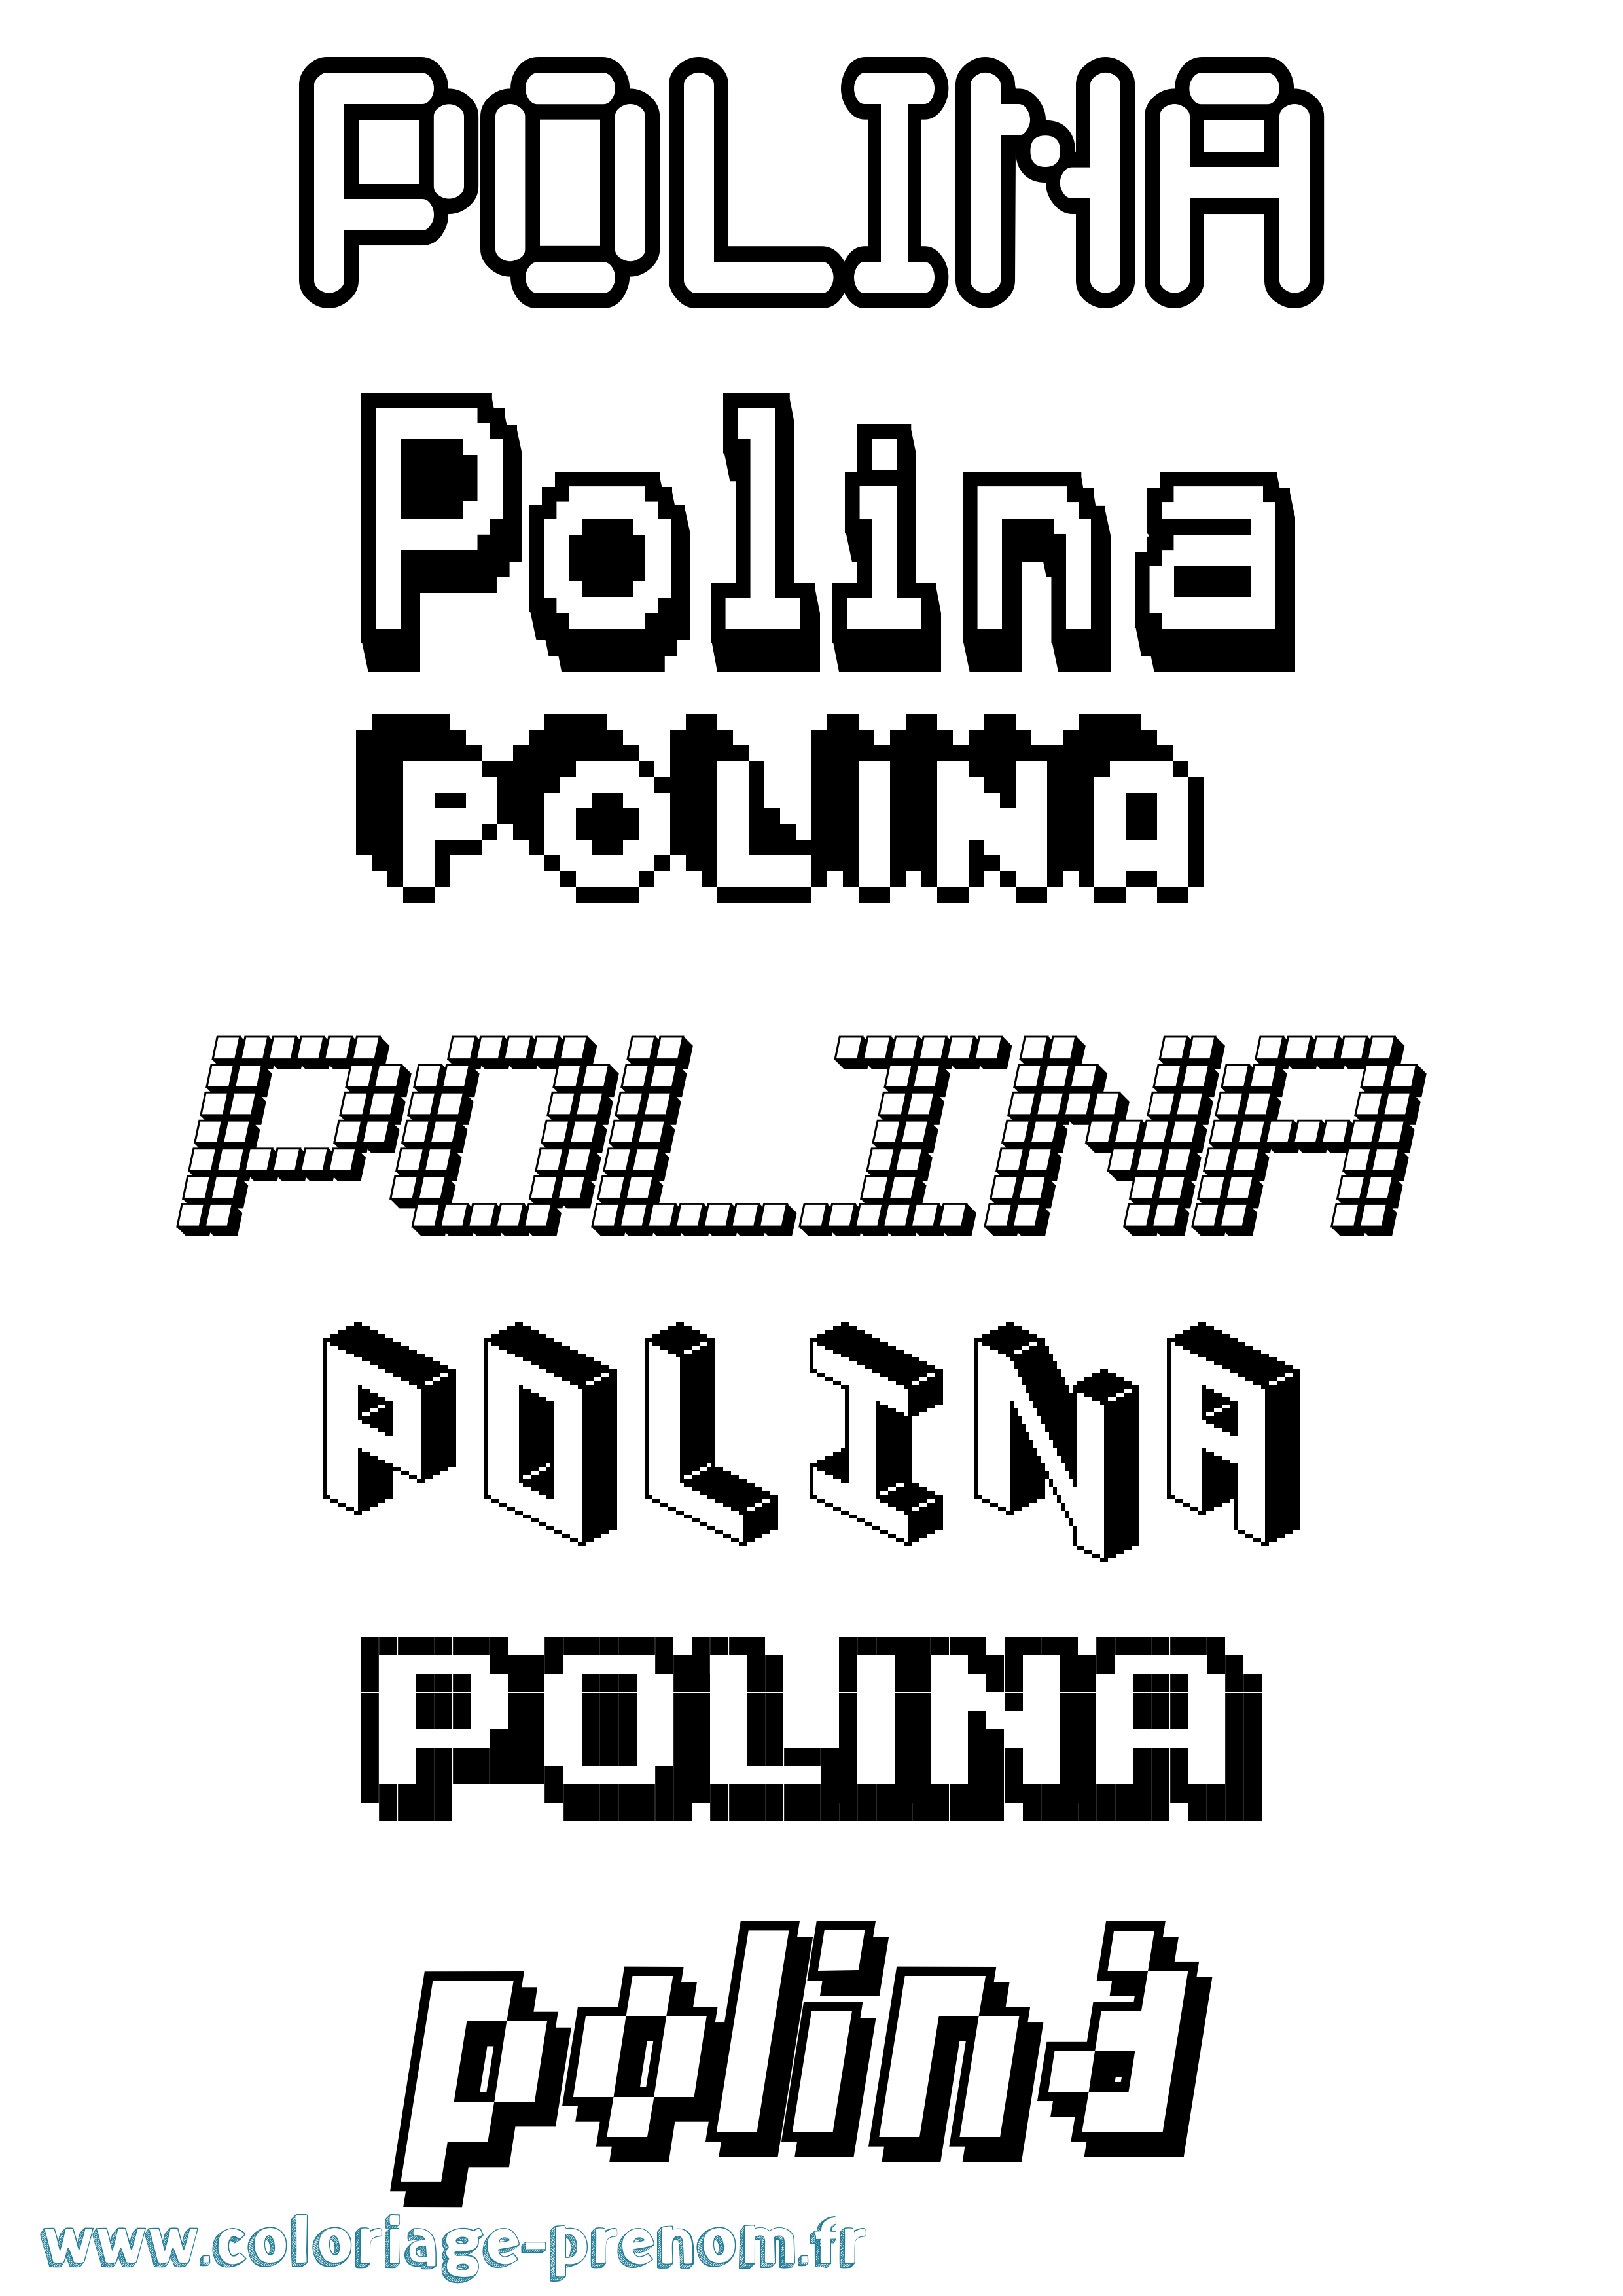 Coloriage prénom Polina Pixel